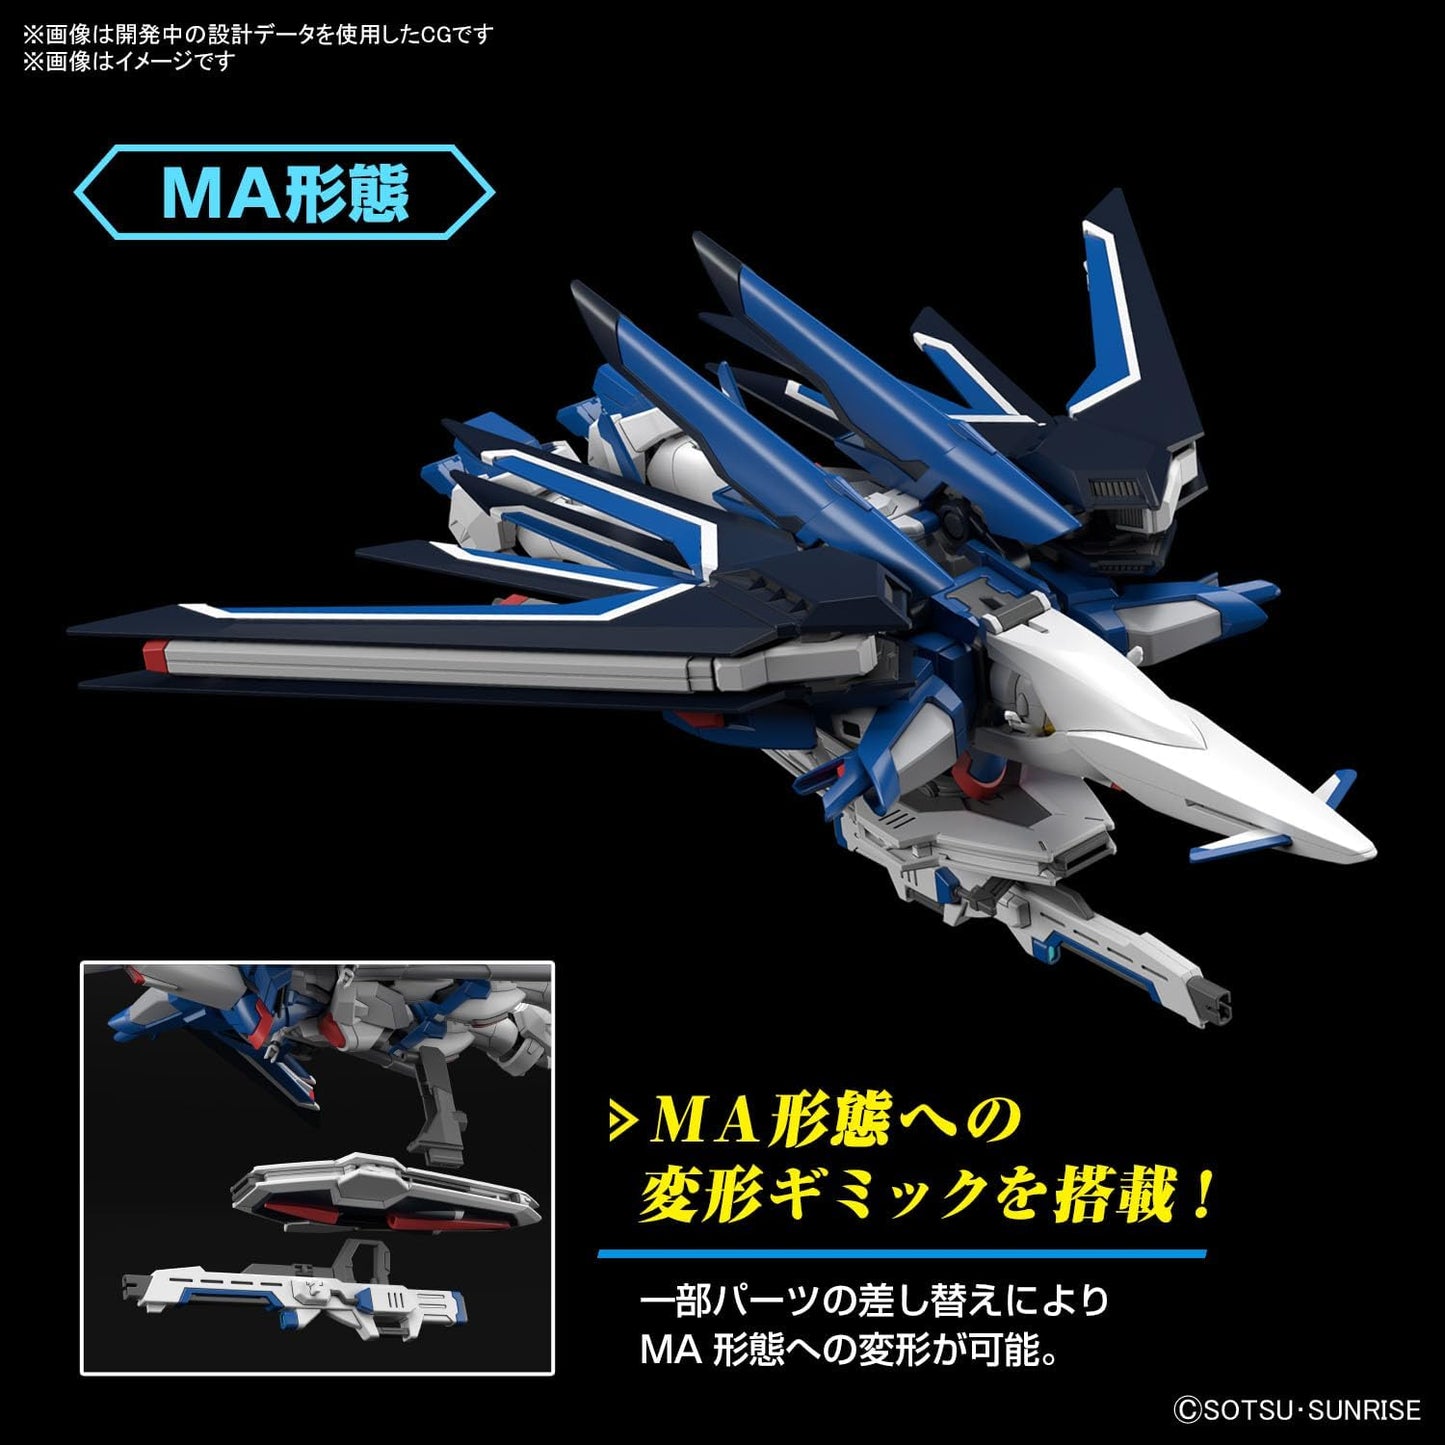 Bandai HG Gundam 1/144 Rising Freedom Gundam Model Kit